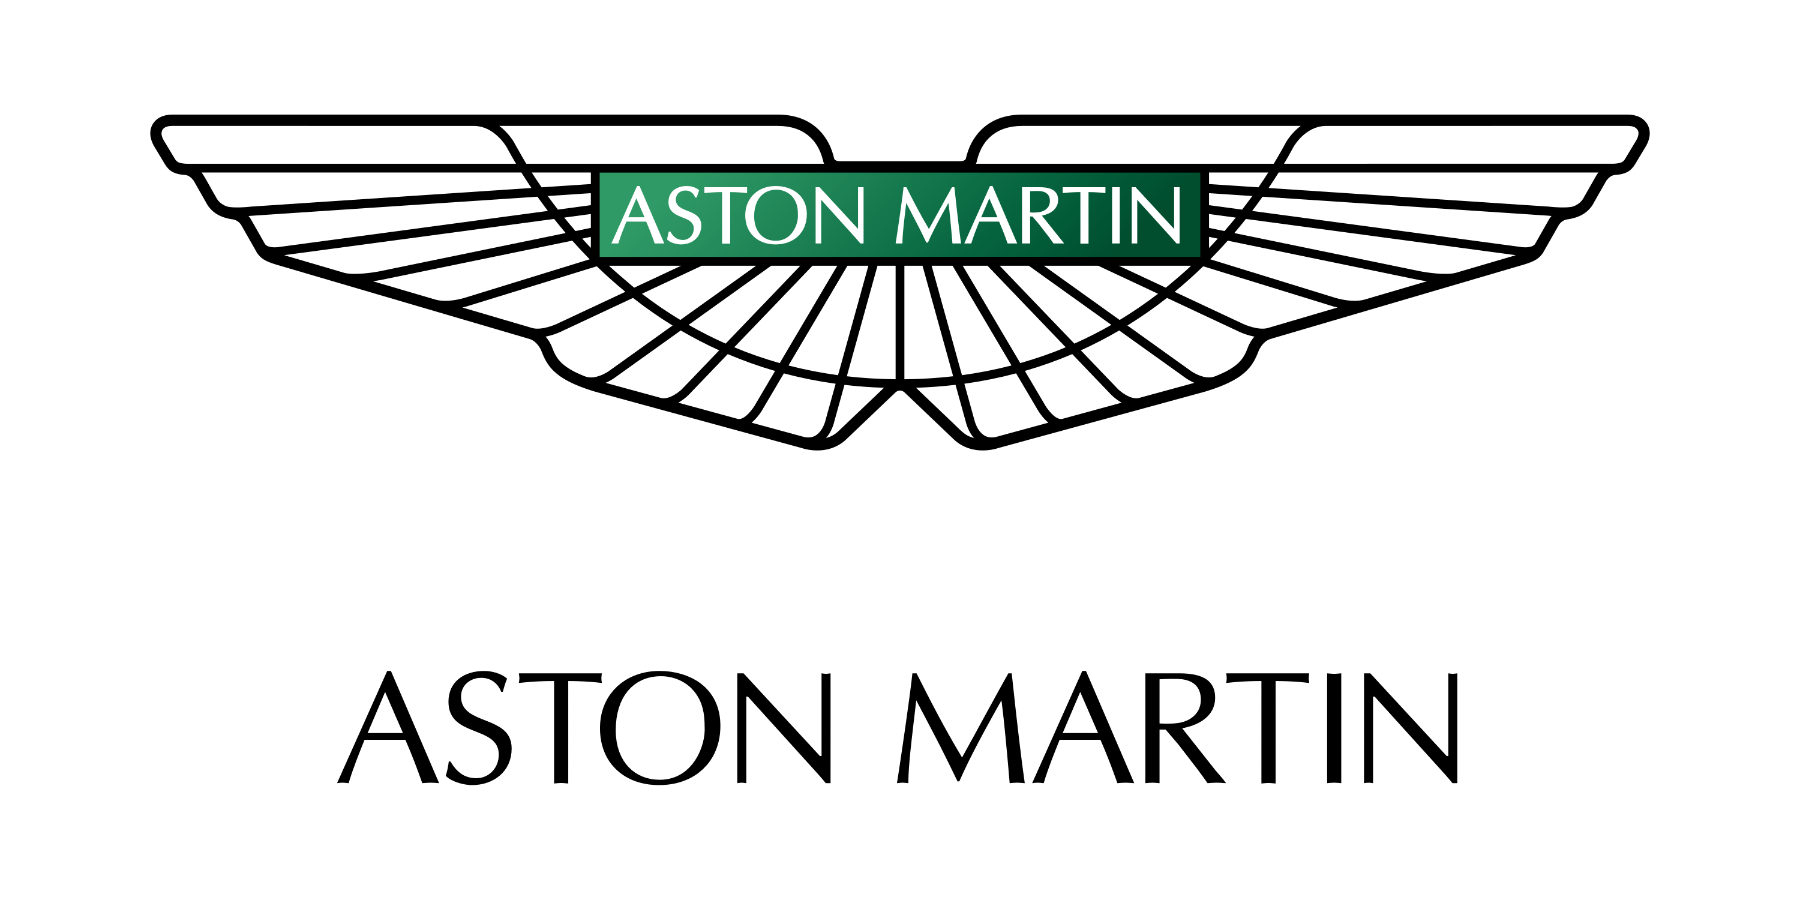 Aston Martin vin patikrinimas